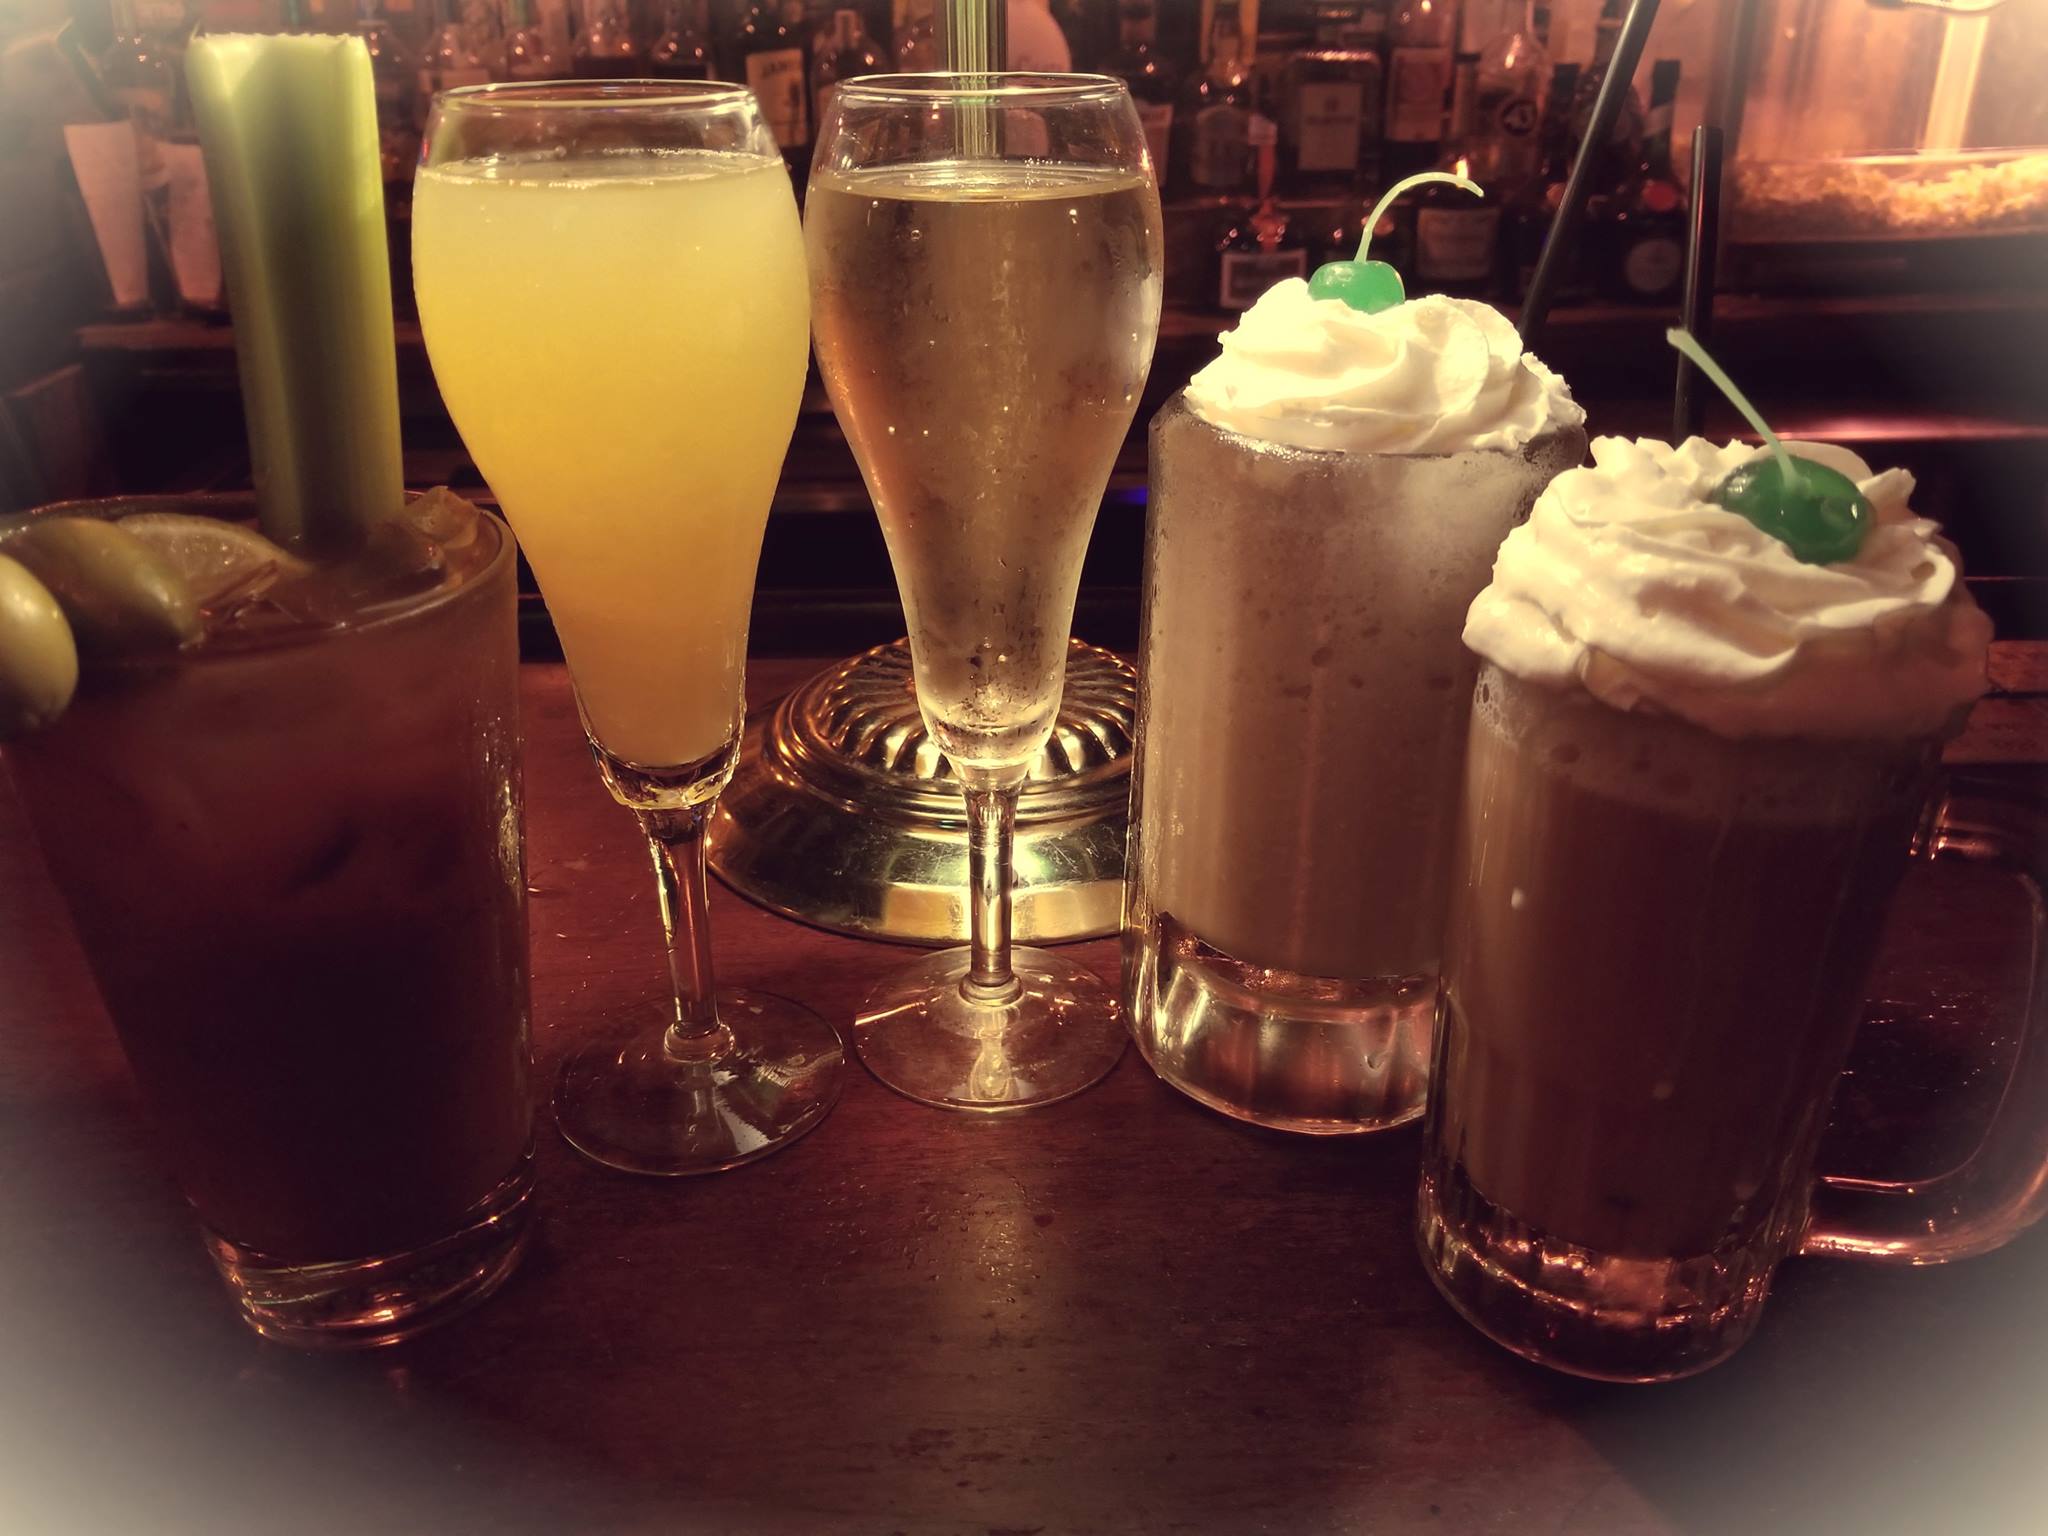 Sampling of McGuire's Beverages